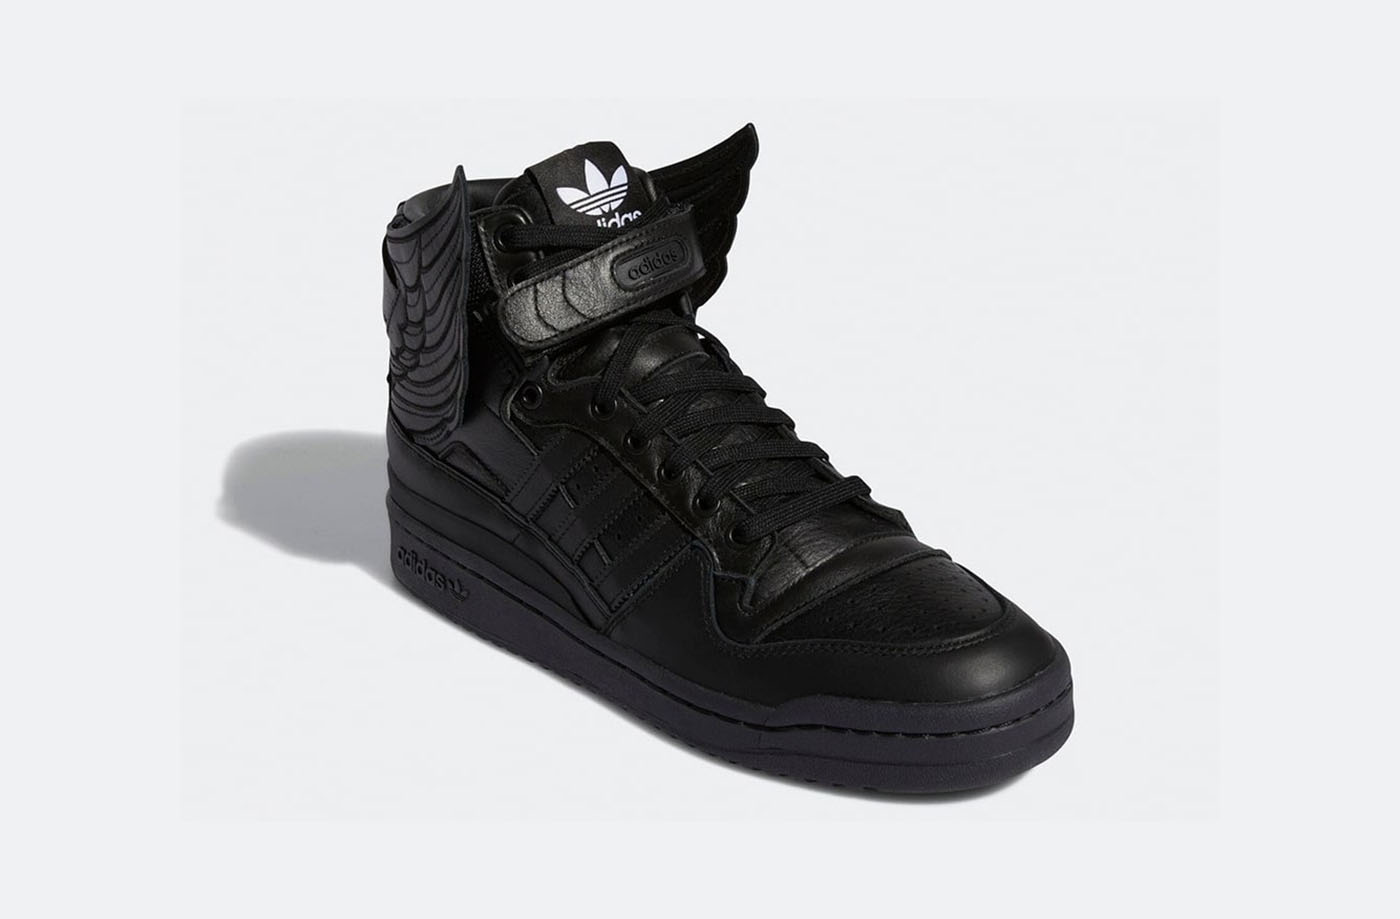 Minachting Duplicaat milieu Jeremy Scott x adidas Forum High Wings 4.0 "Black" Release Date | SoleSavy